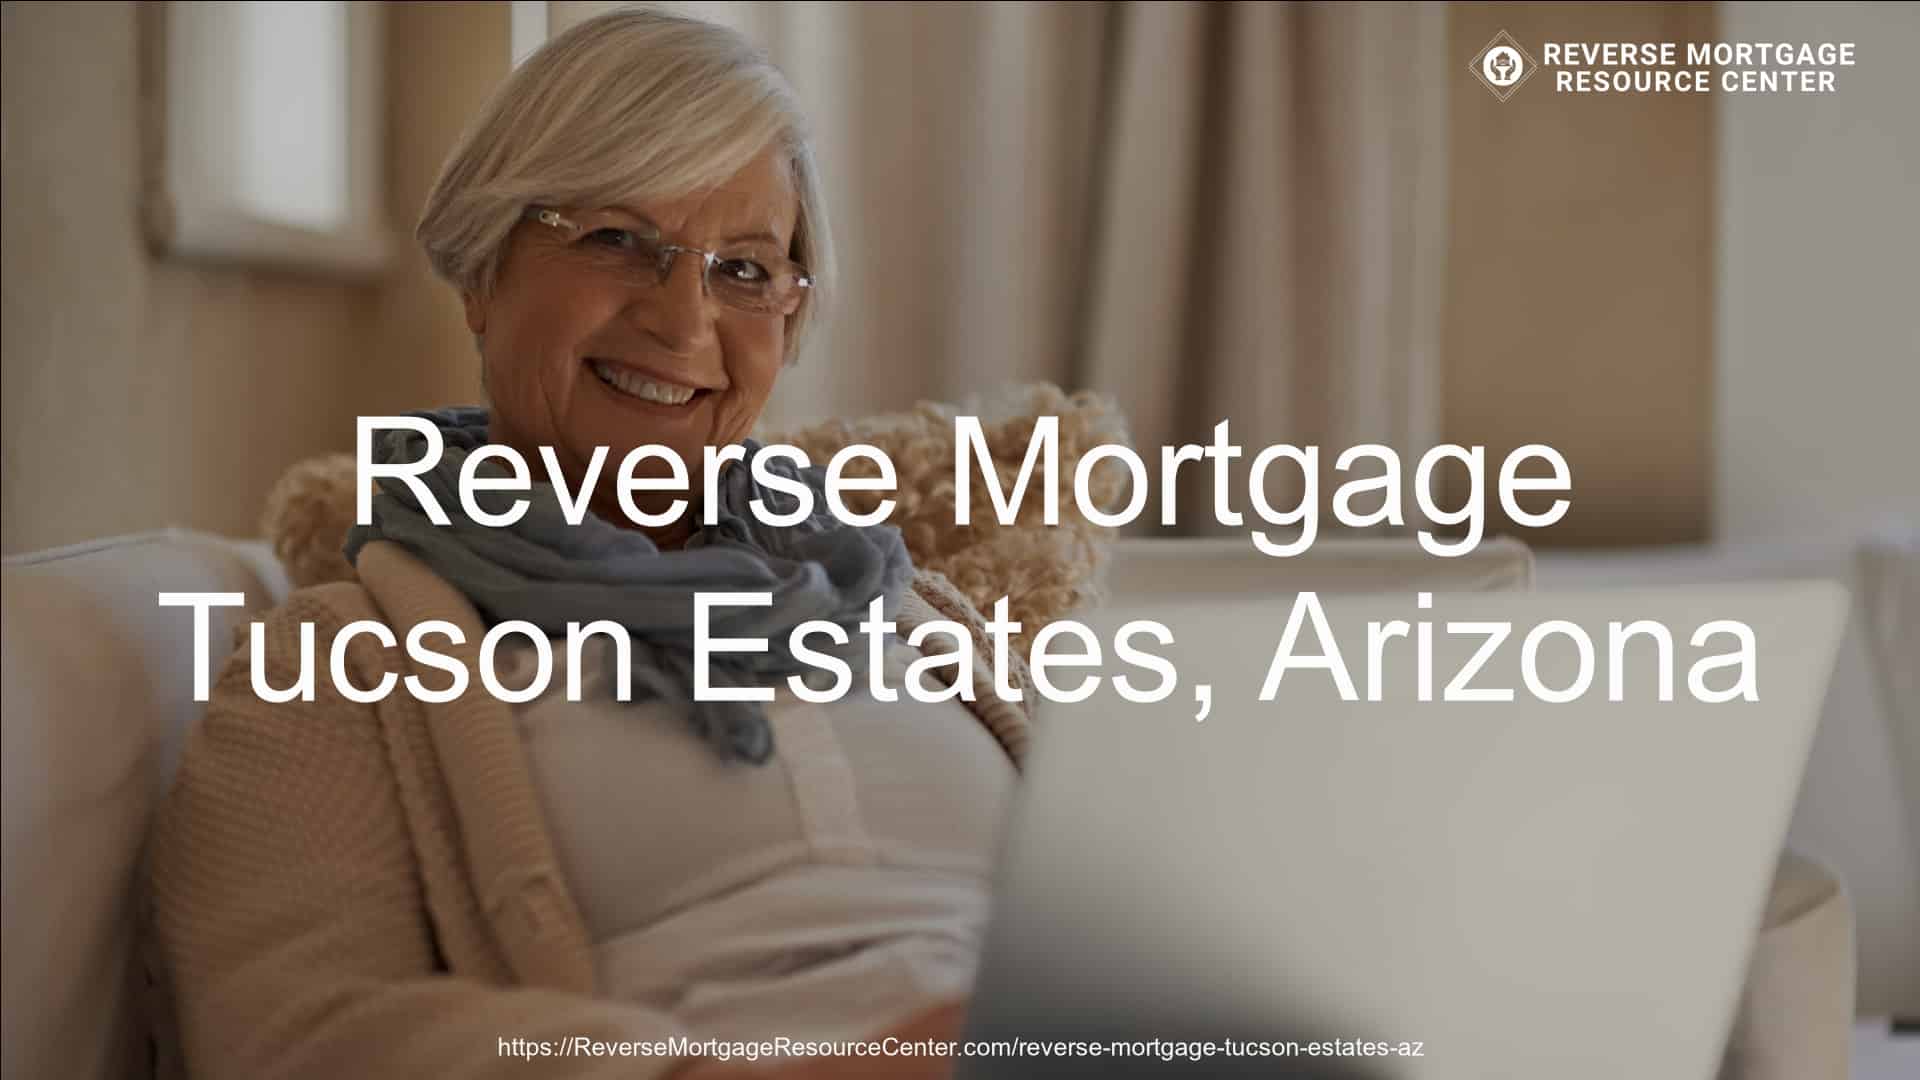 Reverse Mortgage Loans in Tucson Estates Arizona